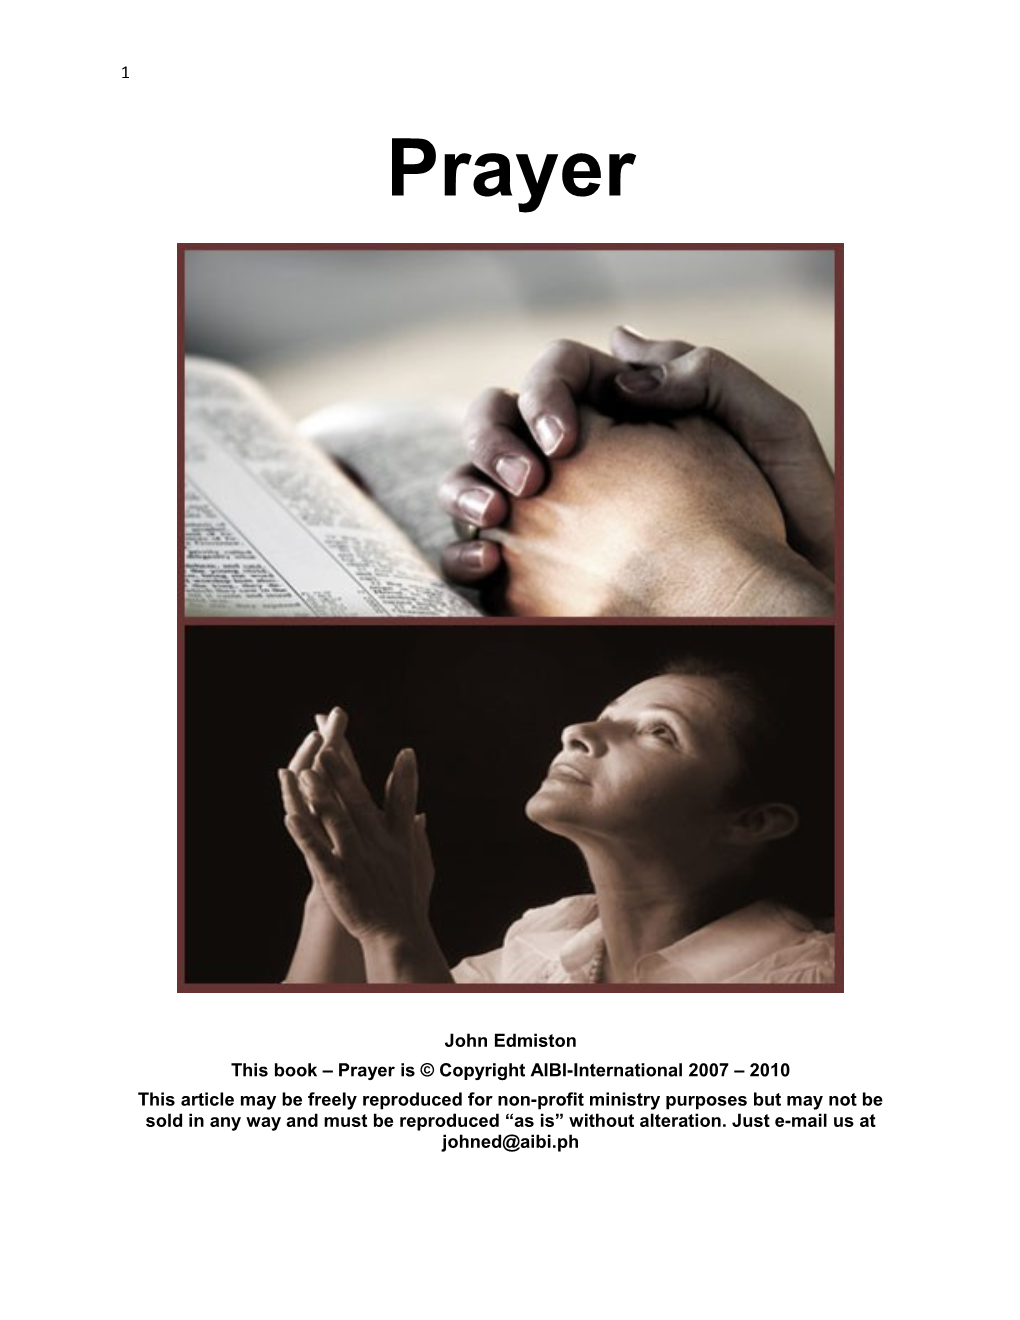 This Book Prayer Is Copyright AIBI-International 2007 2010